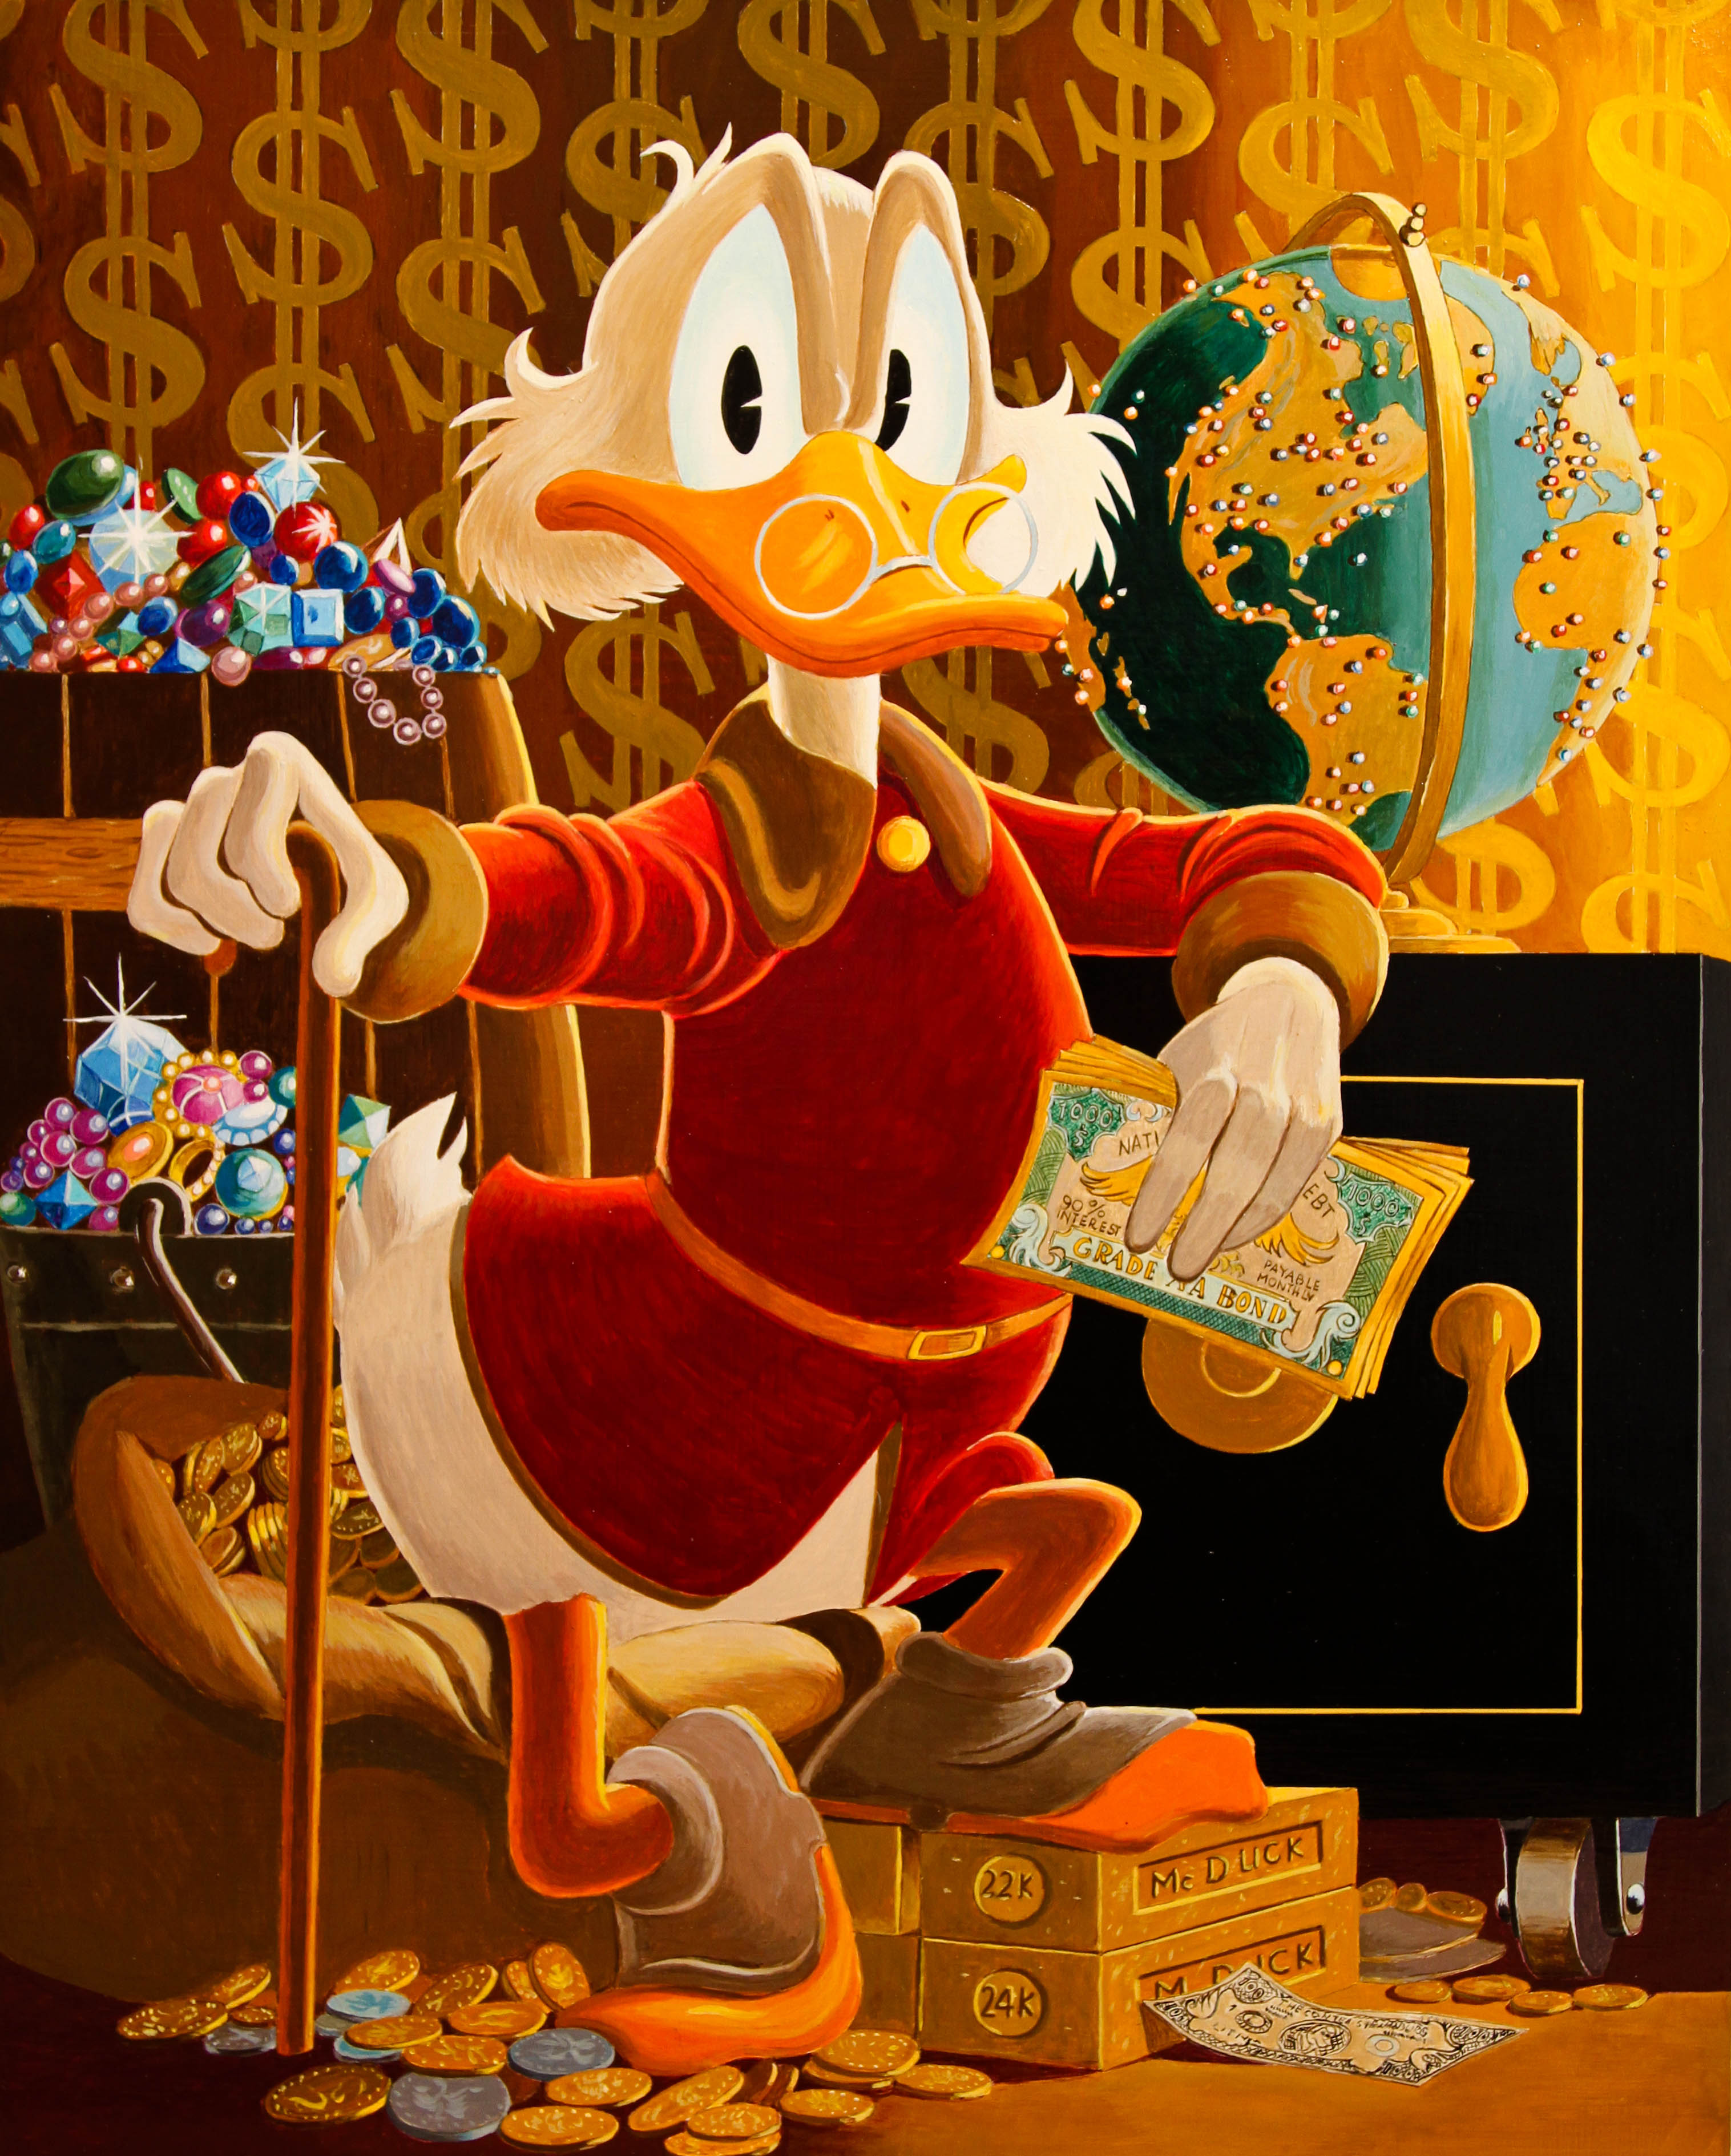 McDuck of Duckburg Carl Barks/Gil